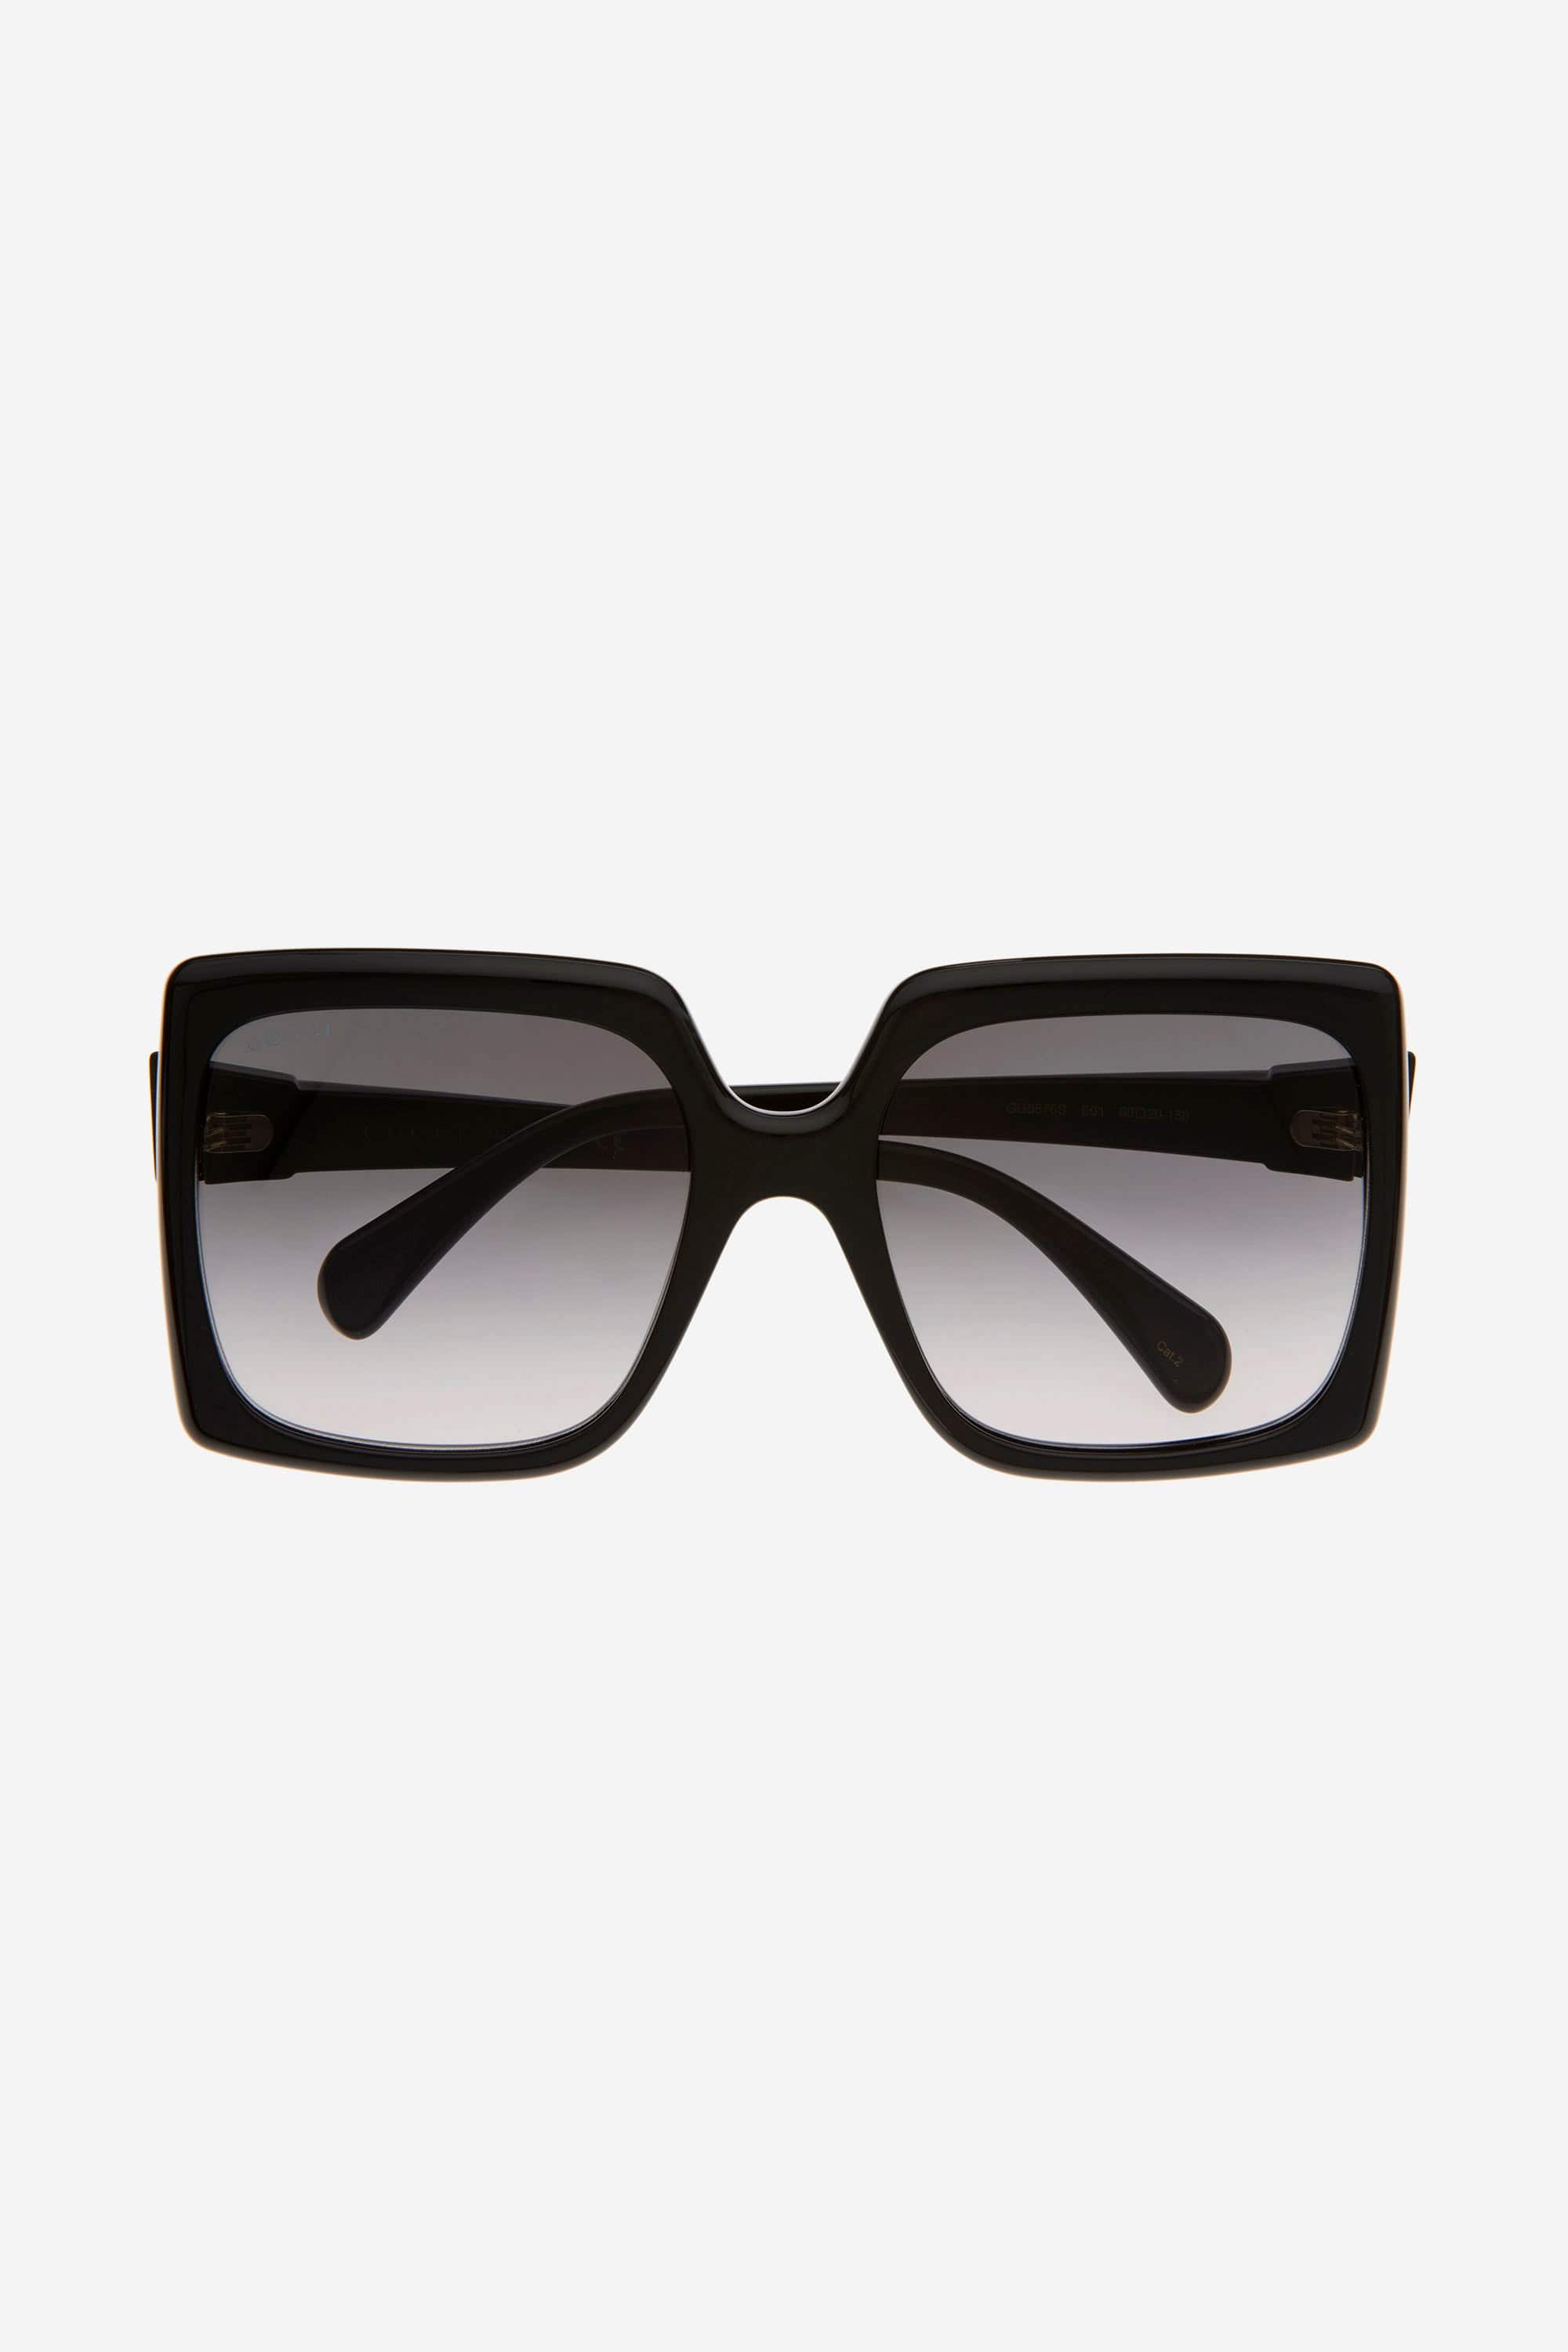 Gucci oversized black squared sunglasses - Eyewear Club